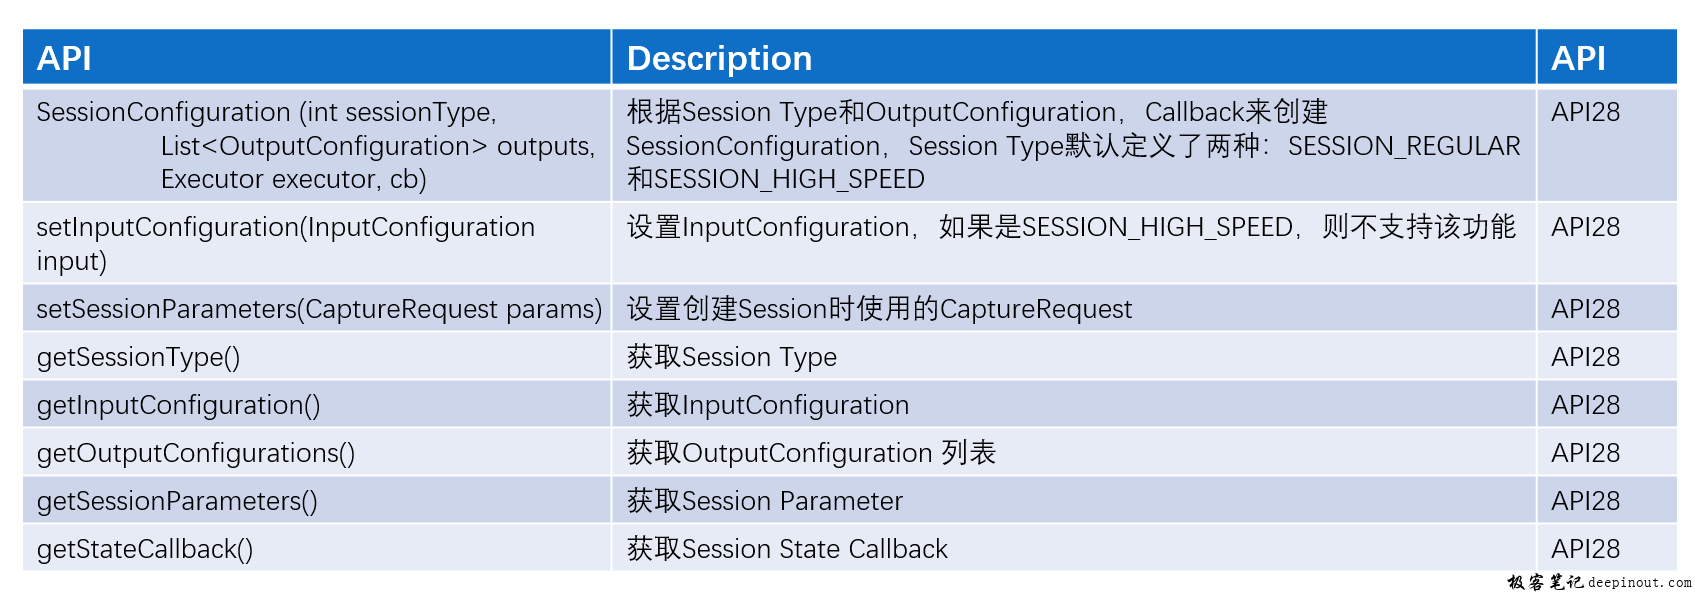 SessionConfiguration APIs概述